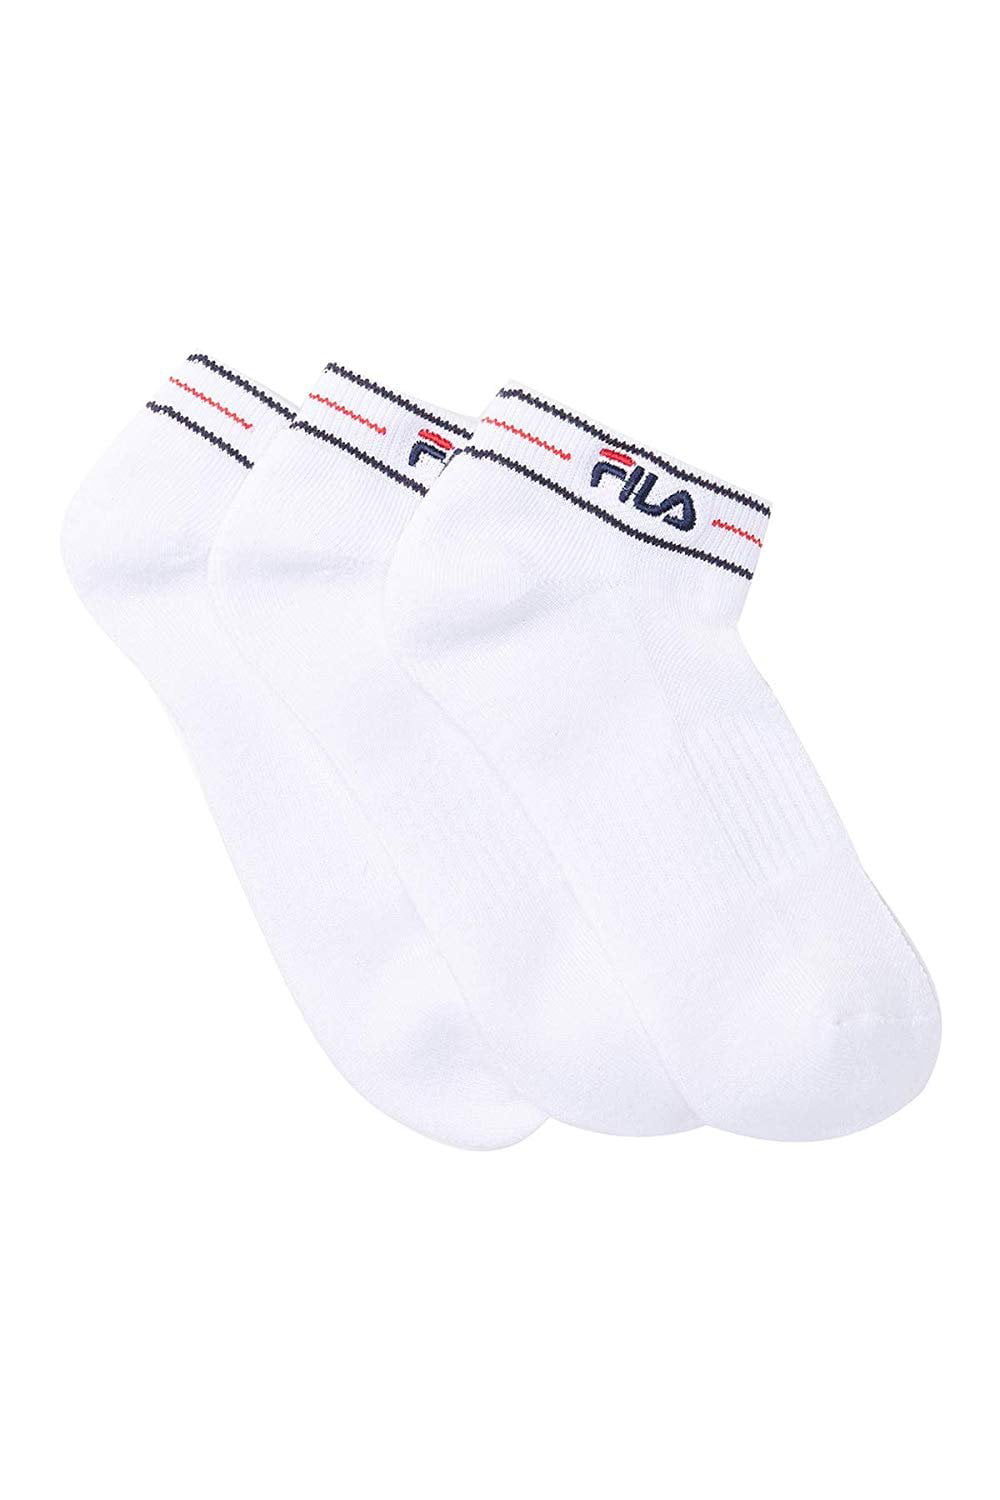 Fila Women's 3-Pack Heritage Stiped Welt Low Cut Socks (White ...